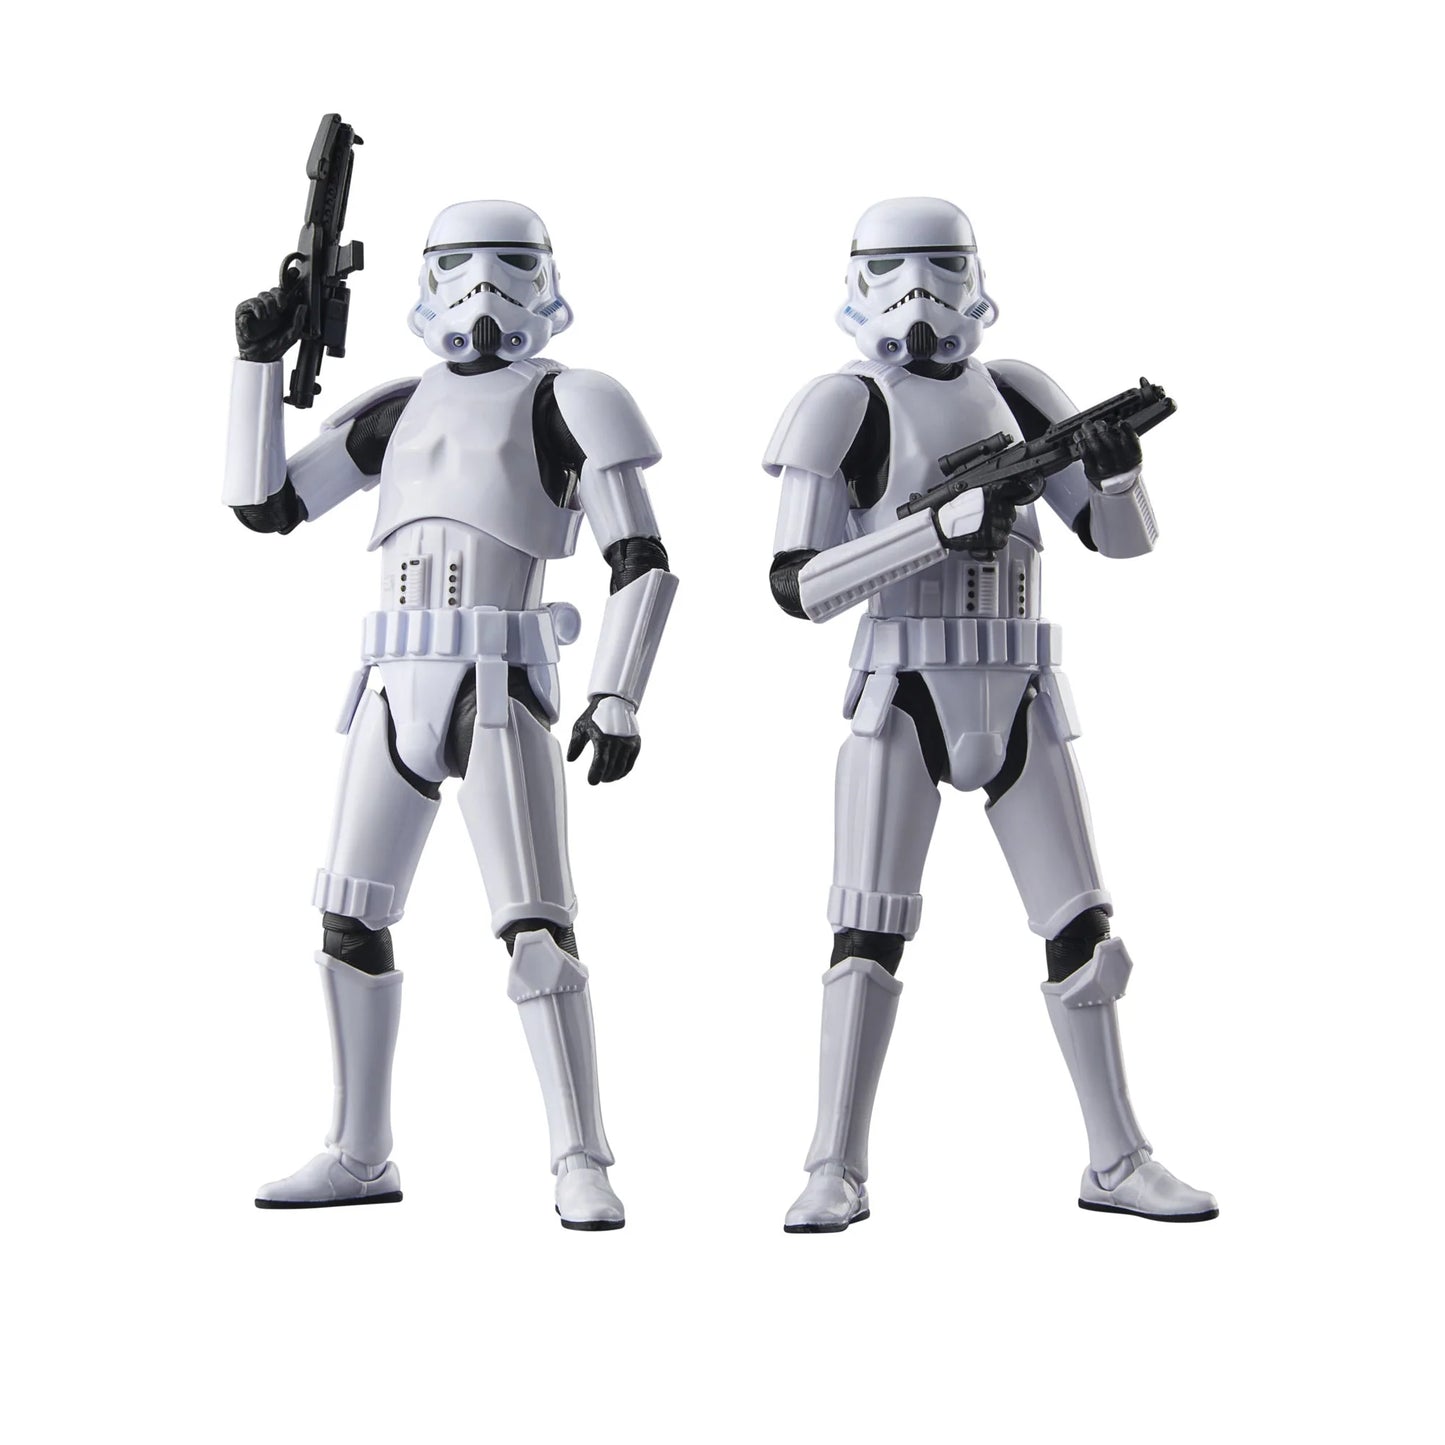 Star Wars The Black Series Starkiller & Troopers Figures